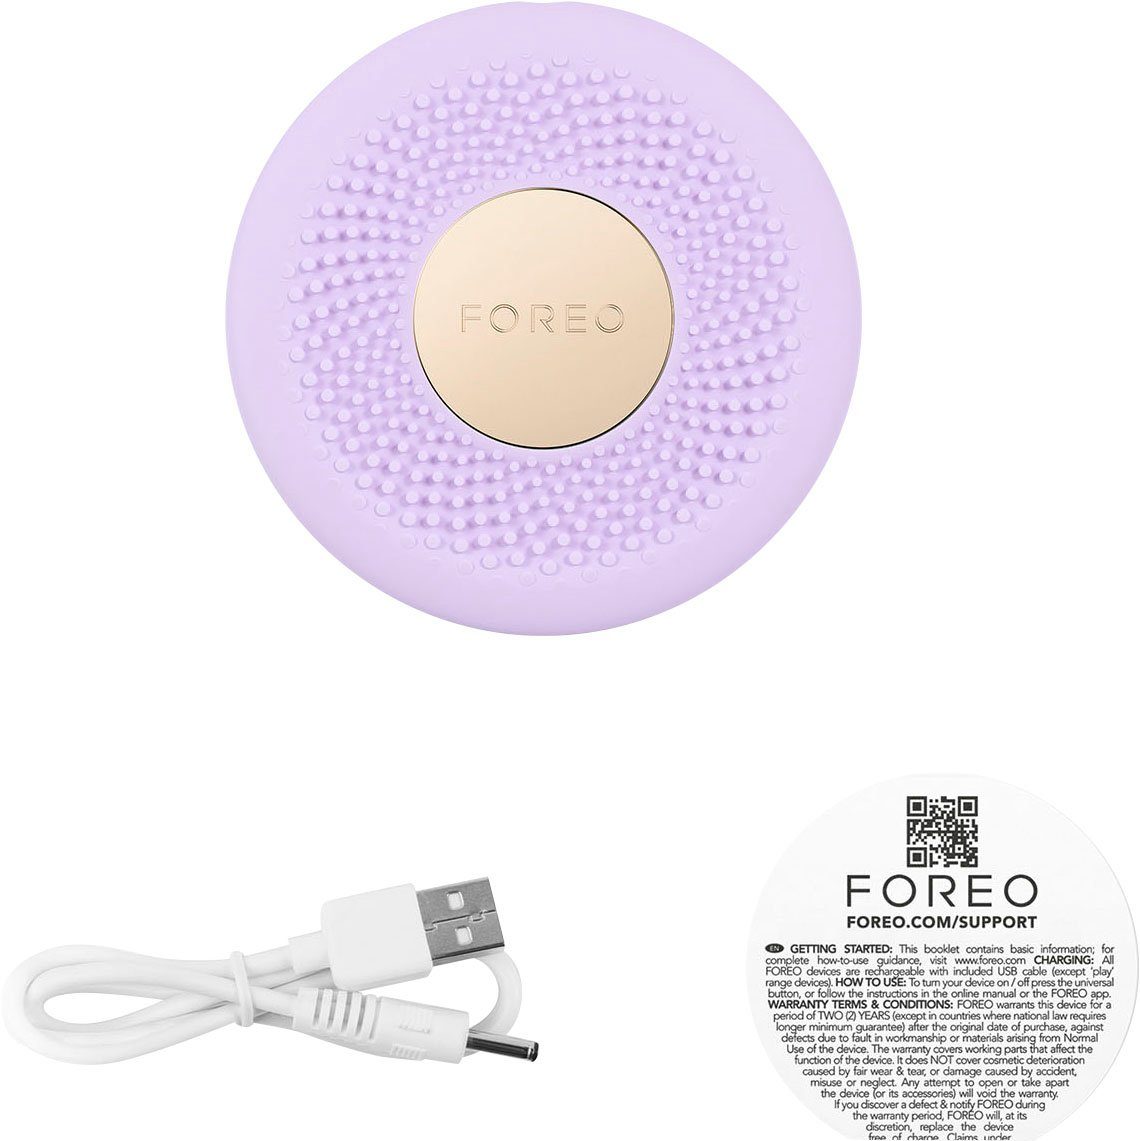 FOREO Kosmetikbehandlungsgerät UFO™ 3 Lavender go